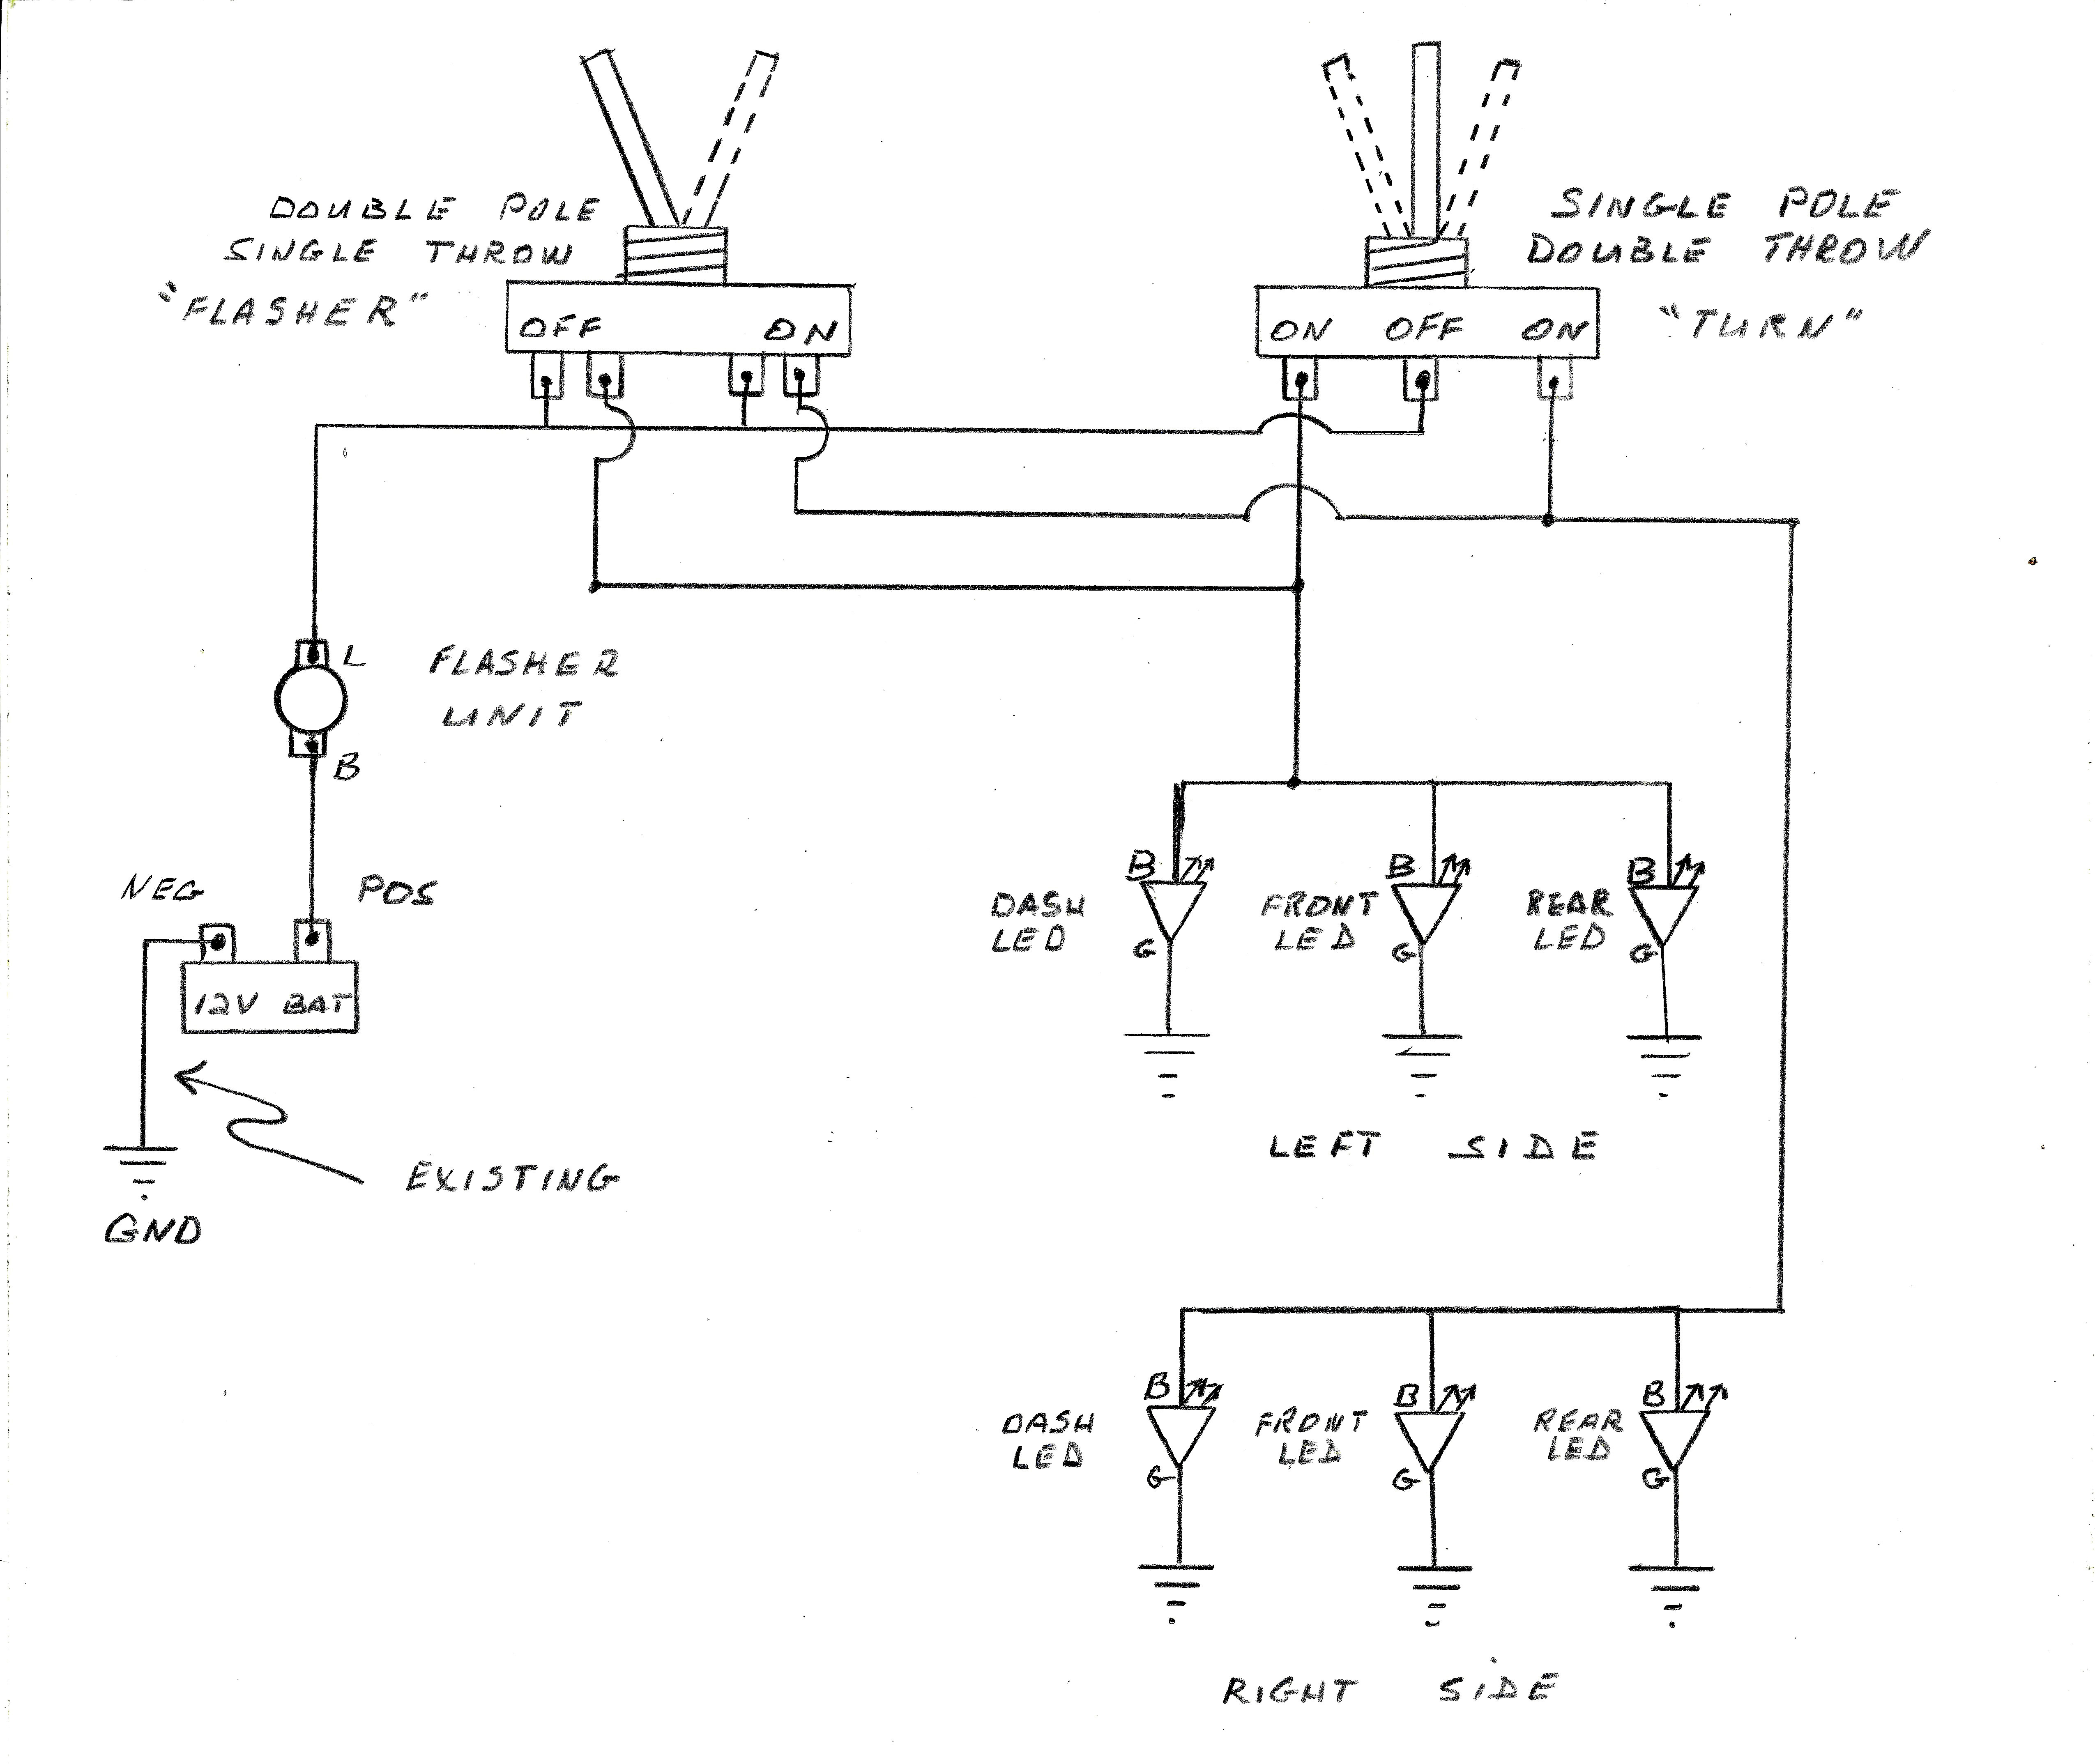 Diagram Grote Universal Turn Signal Switch Wiring Diagram Full Version Hd Quality Wiring Diagram Topdiagrams Villananimocenigo It